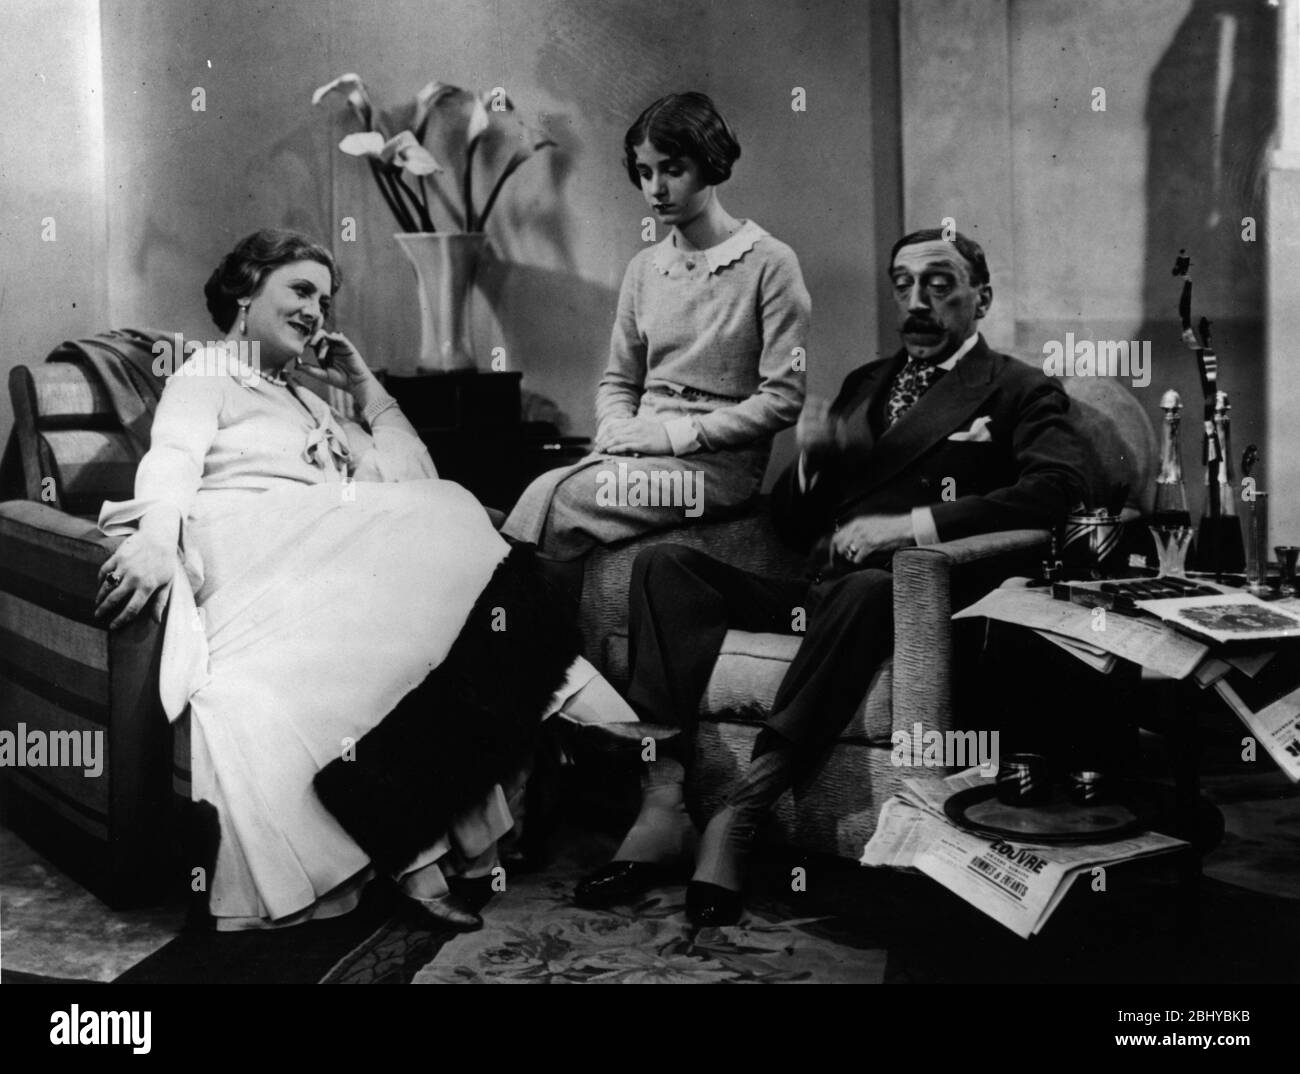 Le Bal Year: 1931 - France Danielle Darrieux, Germaine Dermoz, André Lefaur  Director: Wilhelm Thiele Stock Photo - Alamy